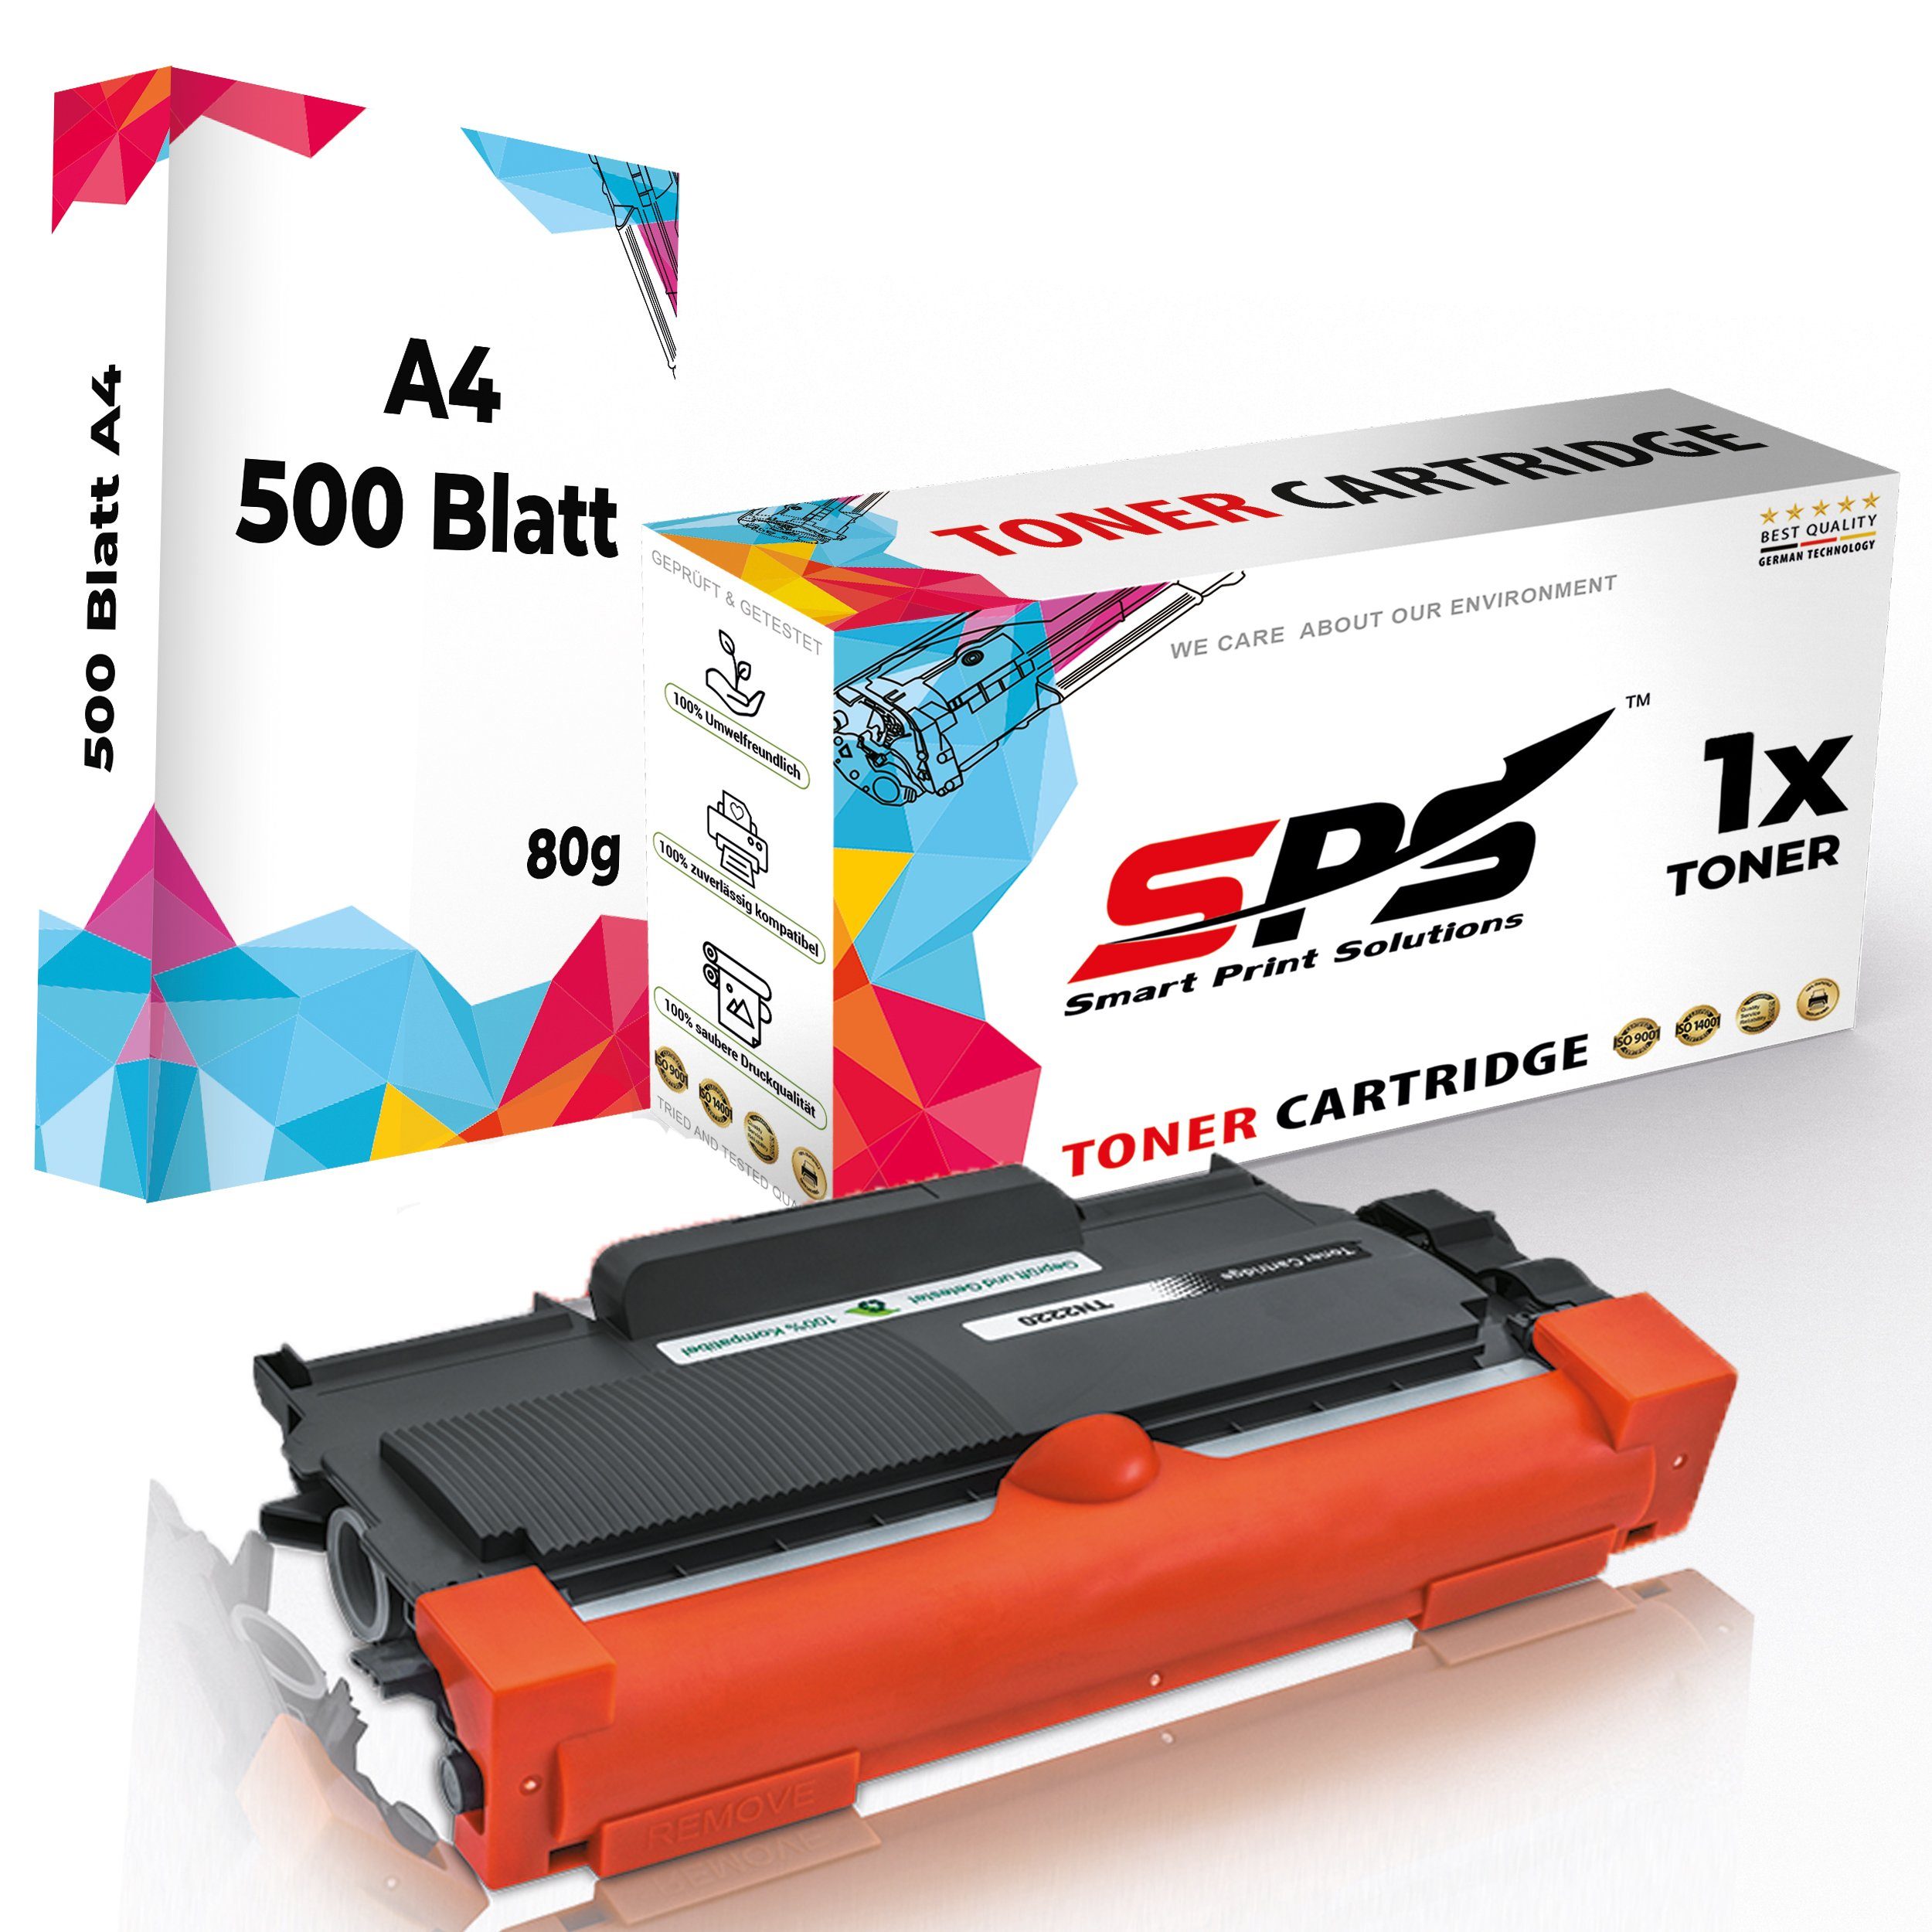 Intellifax (1er Brother (1x Tonerkartusche SPS TN-2220, Papier, Kompatibel Toner 1x für A4 Schwarz) + 2940 Pack